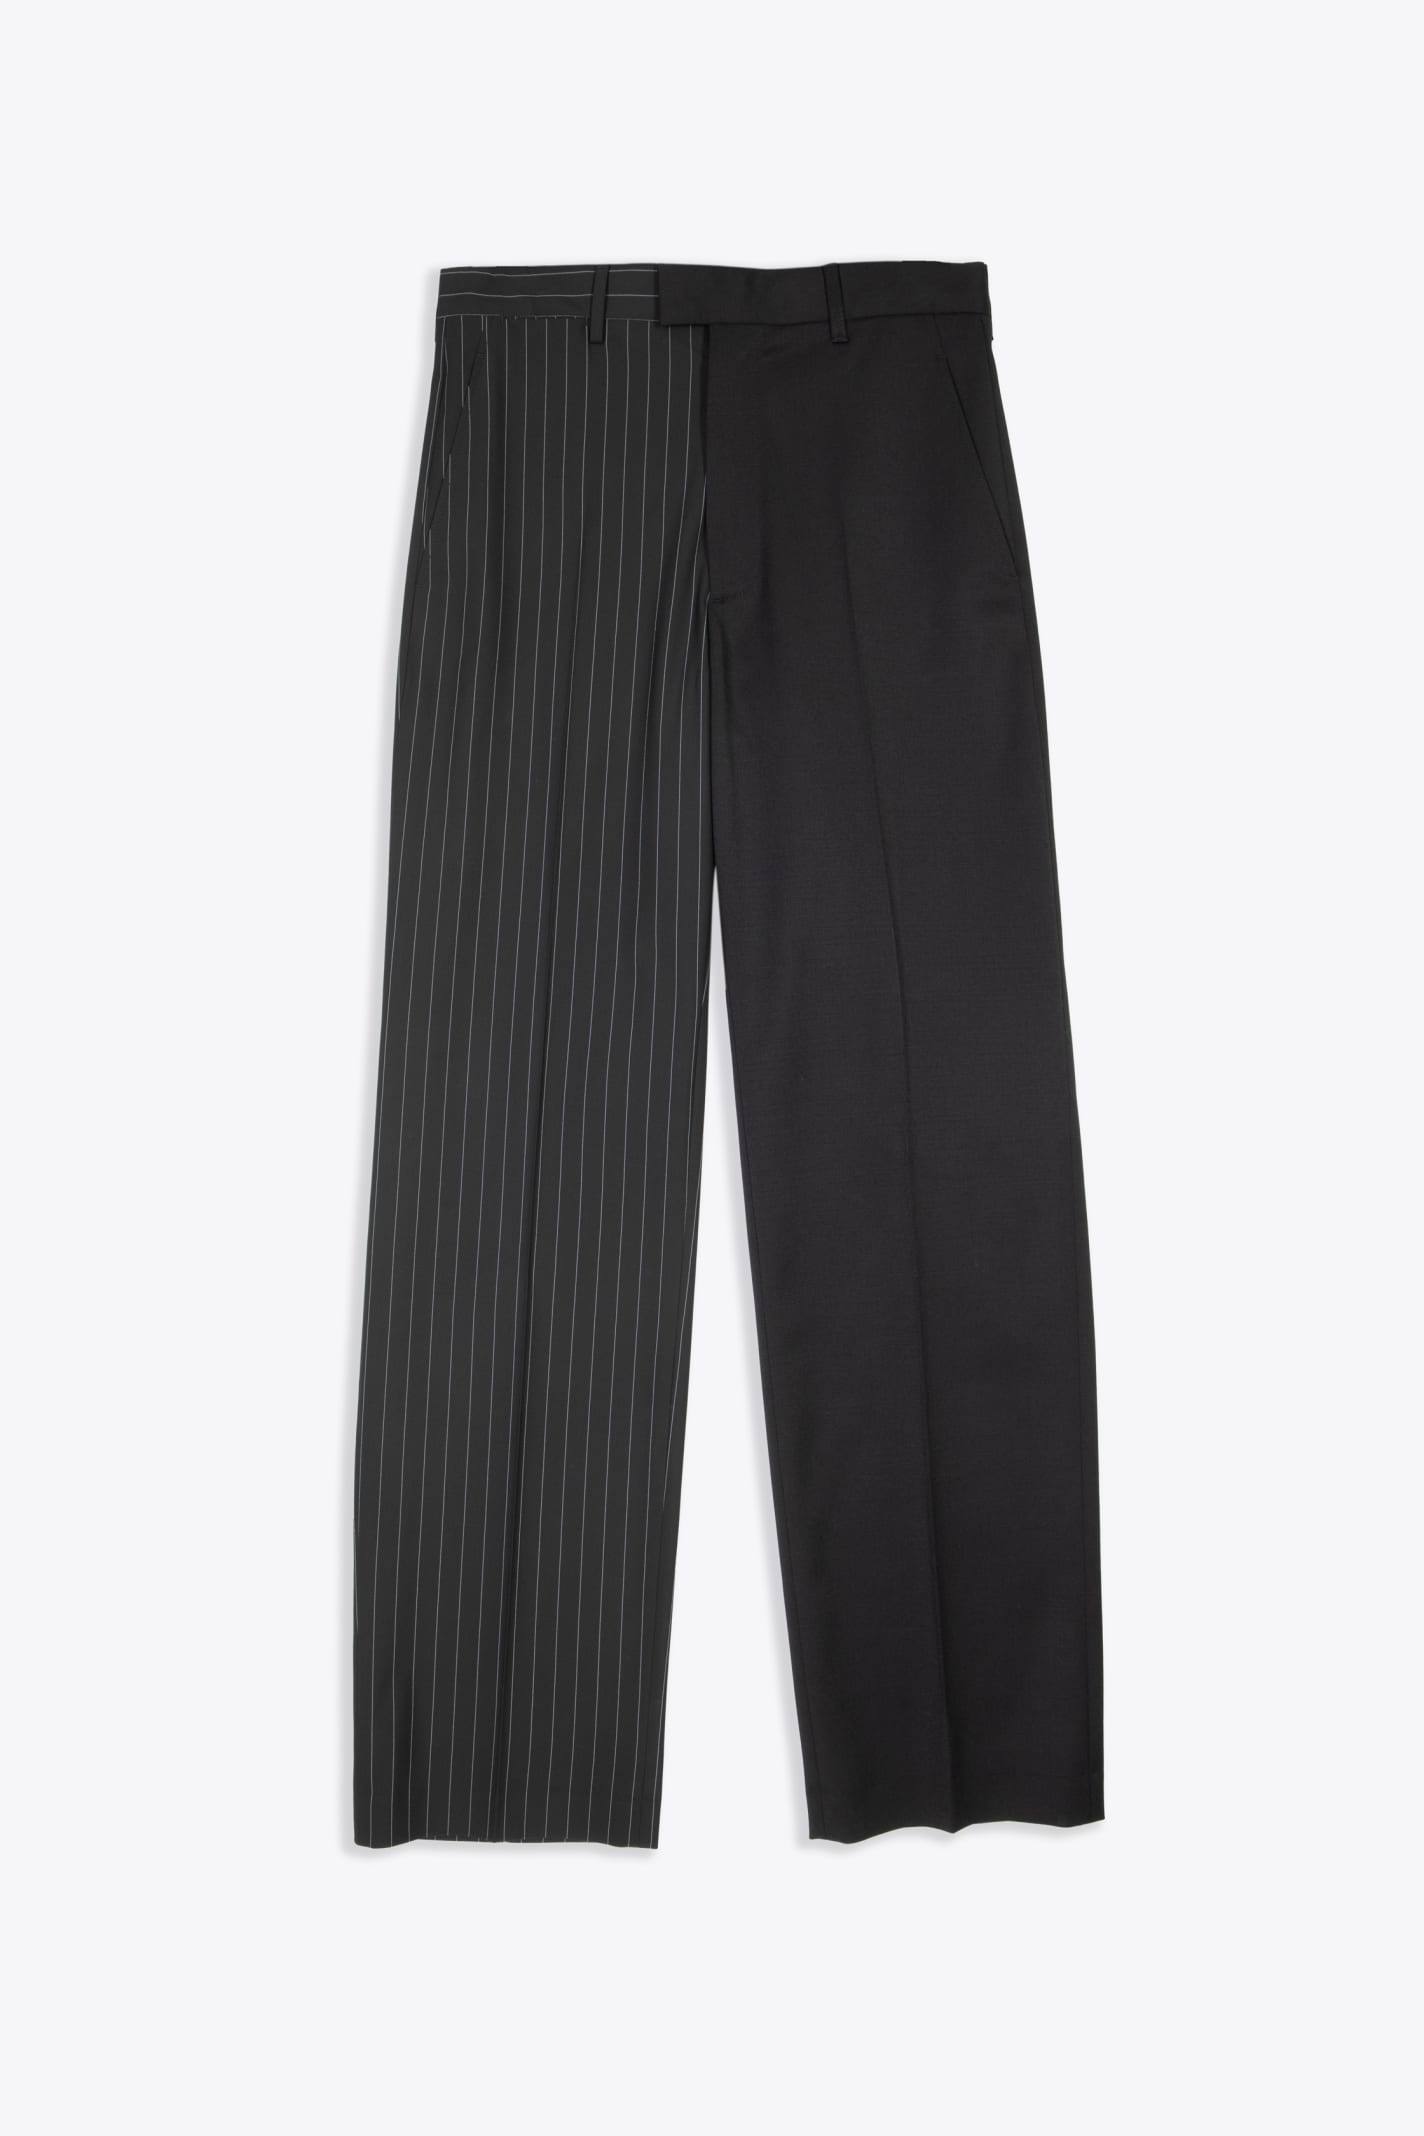 Mm6 Maison Margiela Pantalone Black Tailored Pant With Pinstriped Single Leg In Nero